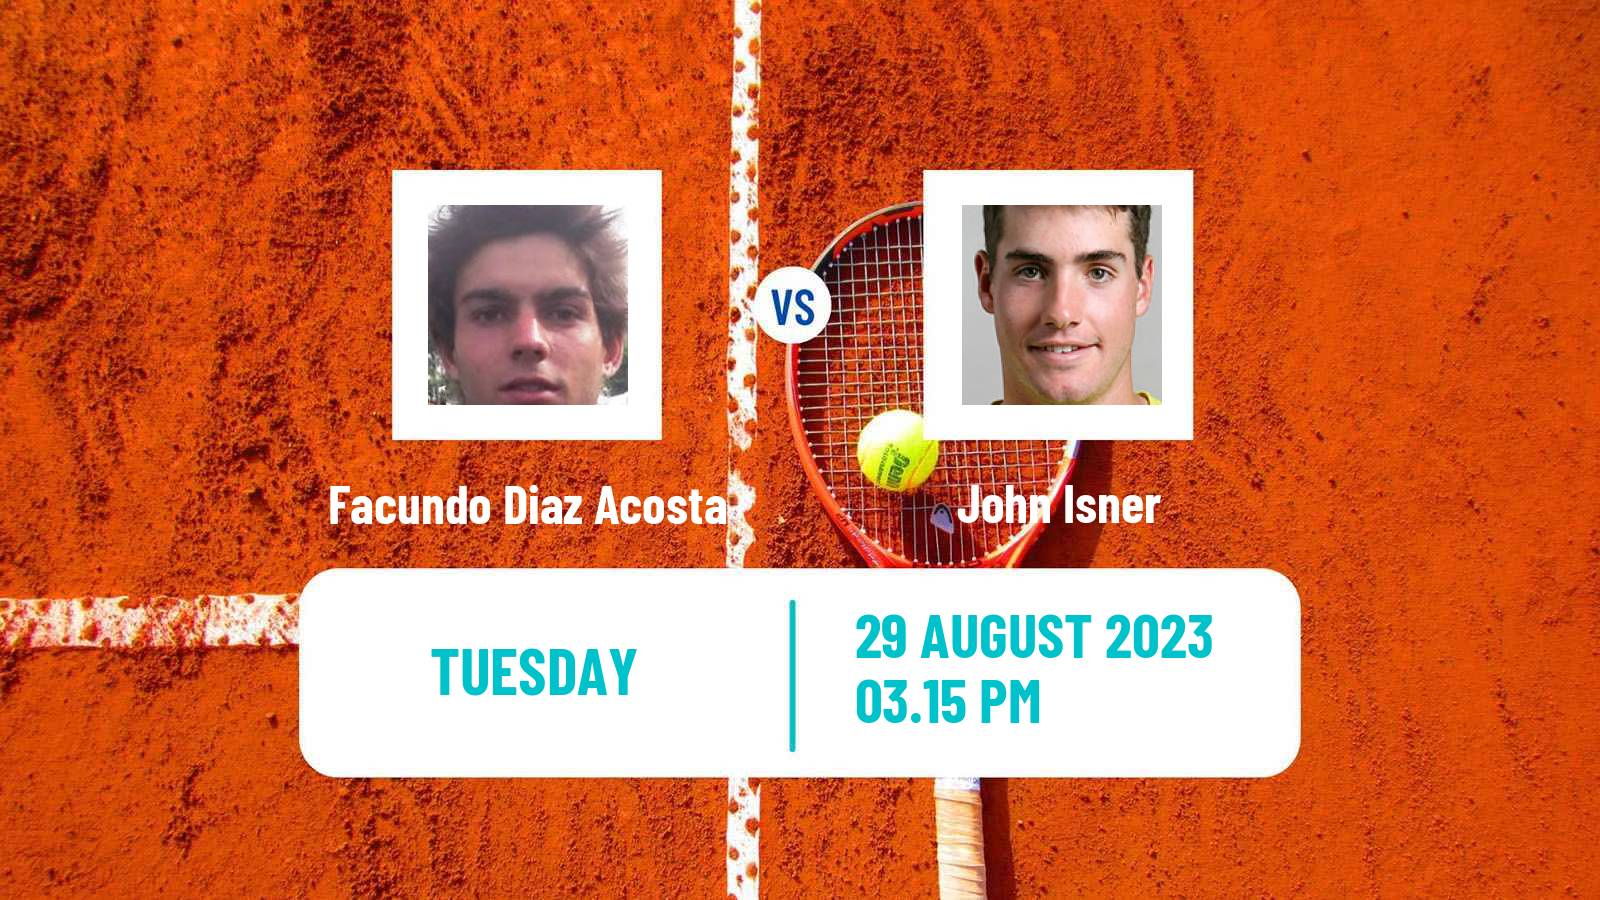 Tennis ATP US Open Facundo Diaz Acosta - John Isner